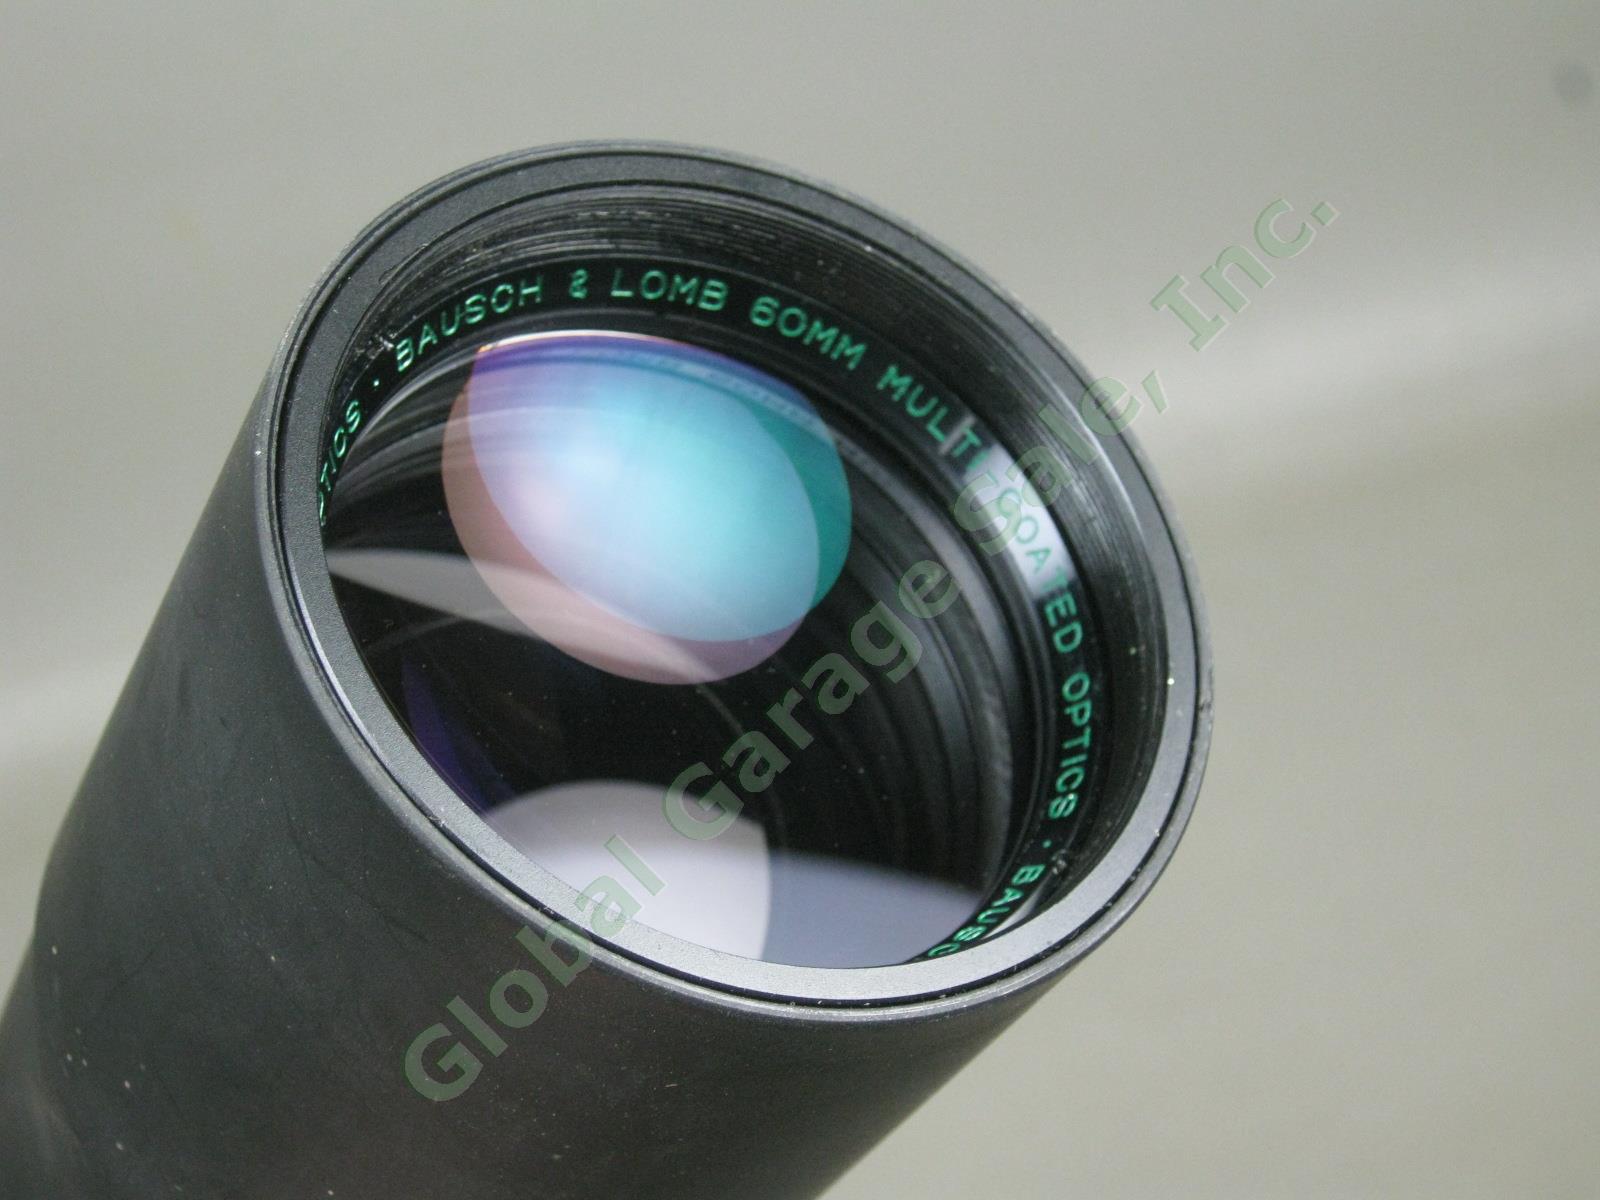 Bausch & Lomb Discoverer Zoom Telescope Spotting Scope 60mm Lens 15x-60x + Caps 5